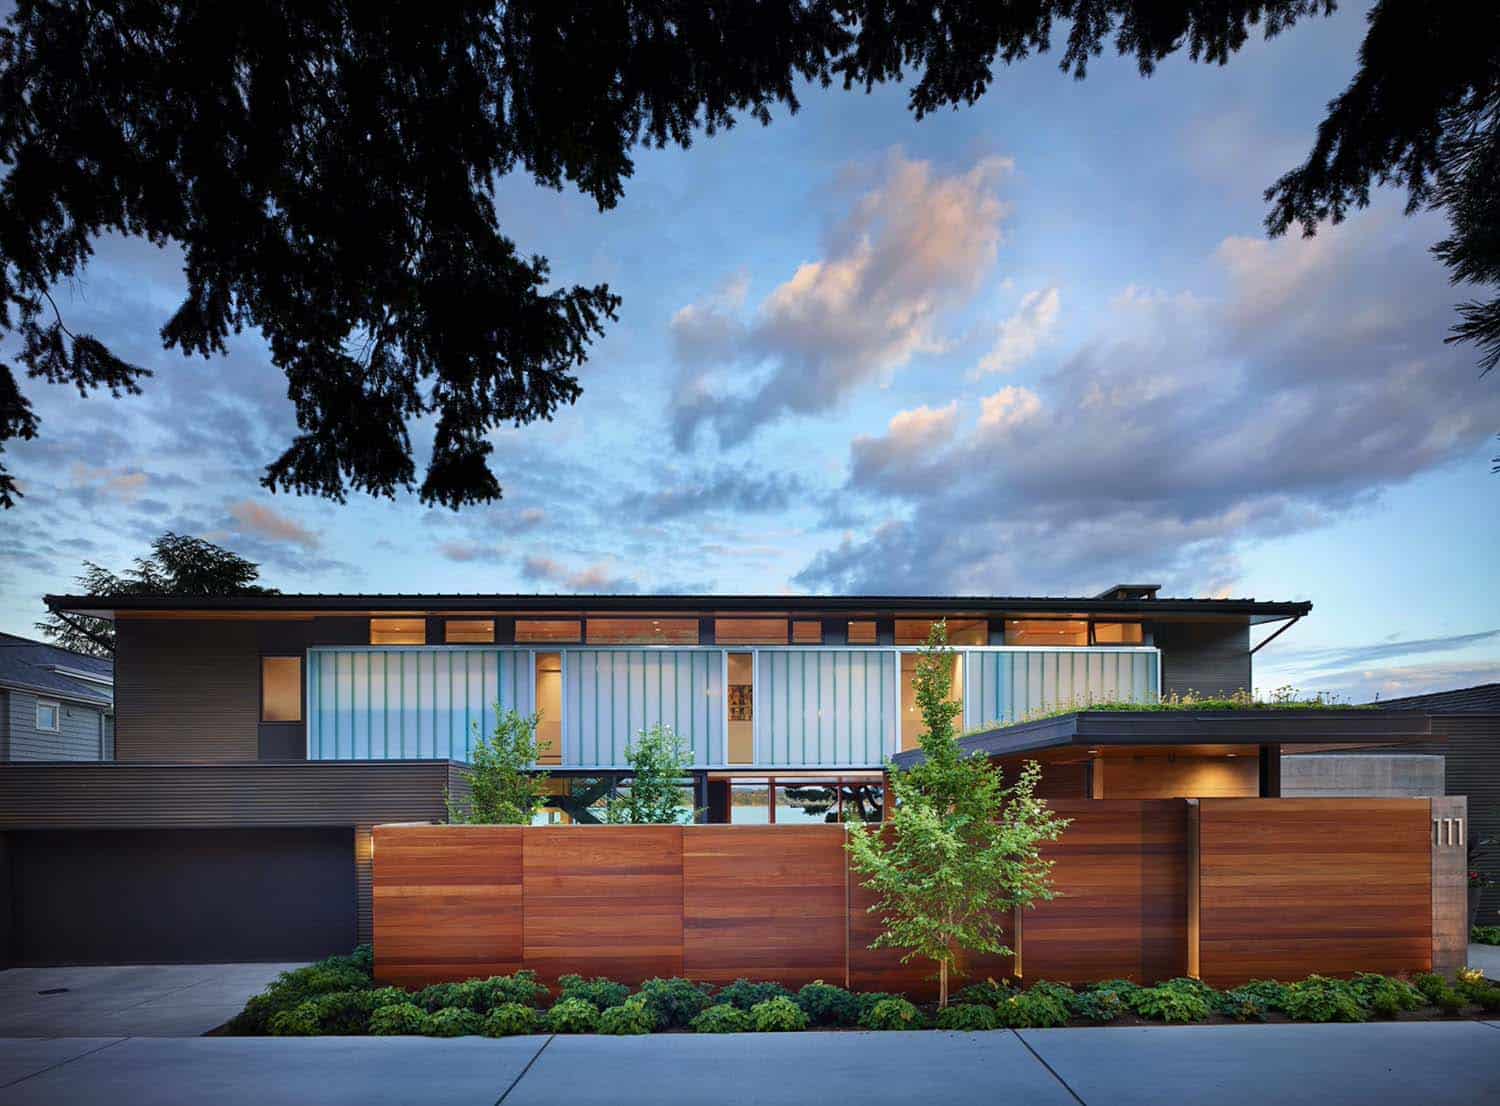 Breathtaking courtyard house offers serene views over Lake Washington